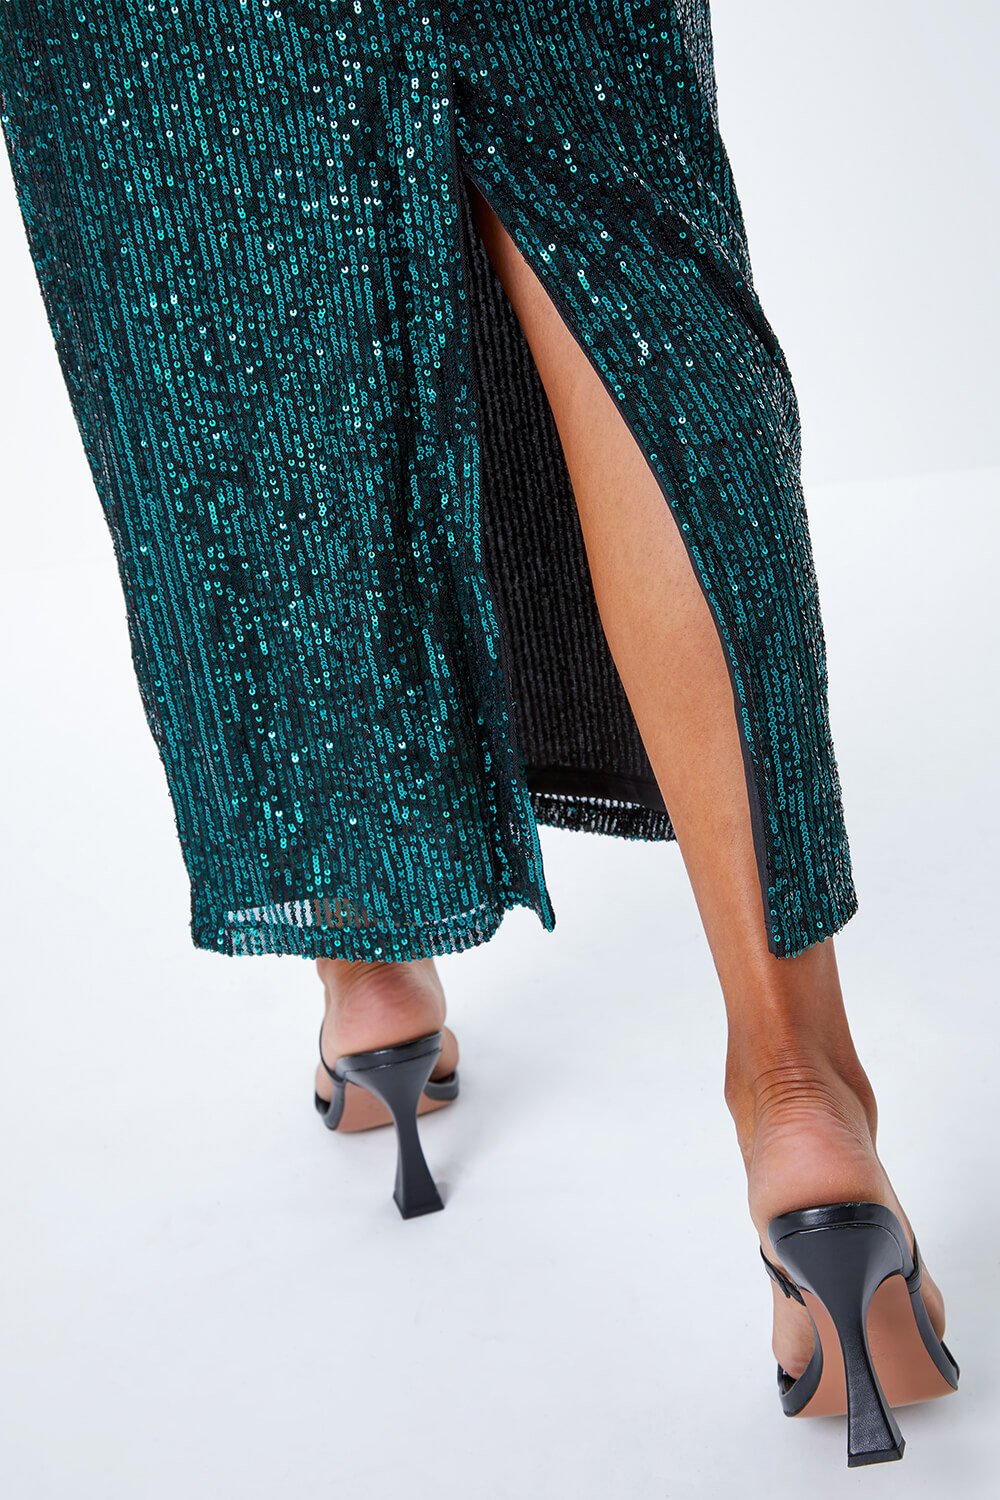 Emerald Sequin Wrap Stretch Maxi Dress, Image 5 of 5